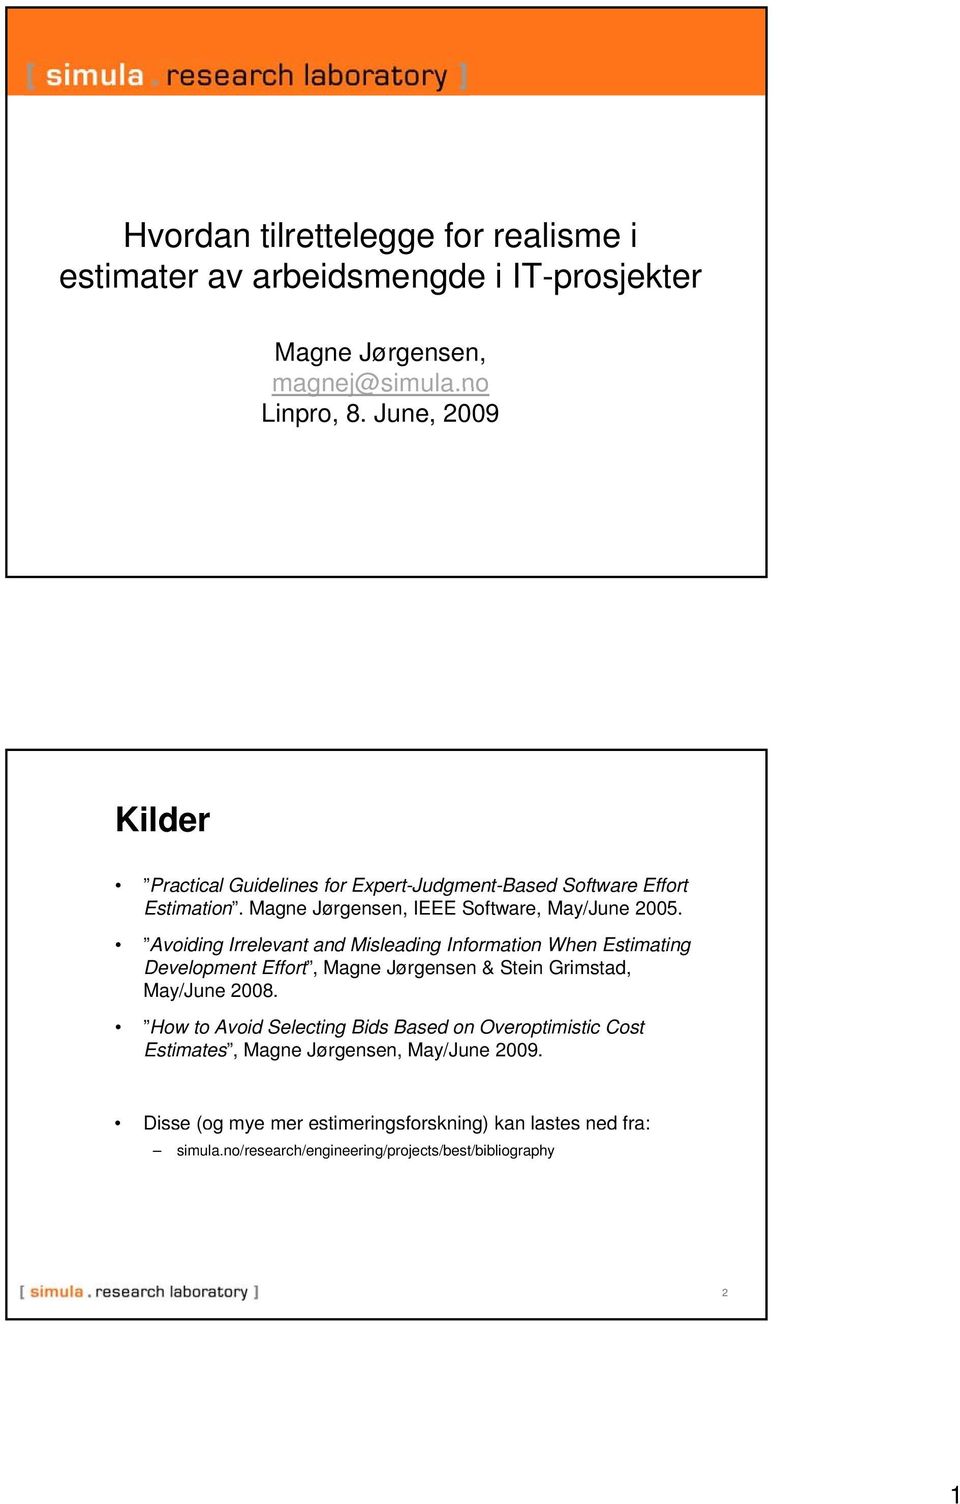 Avoiding Irrelevant and Misleading Information When Estimating Development Effort, Magne Jørgensen & Stein Grimstad, May/June 2008.